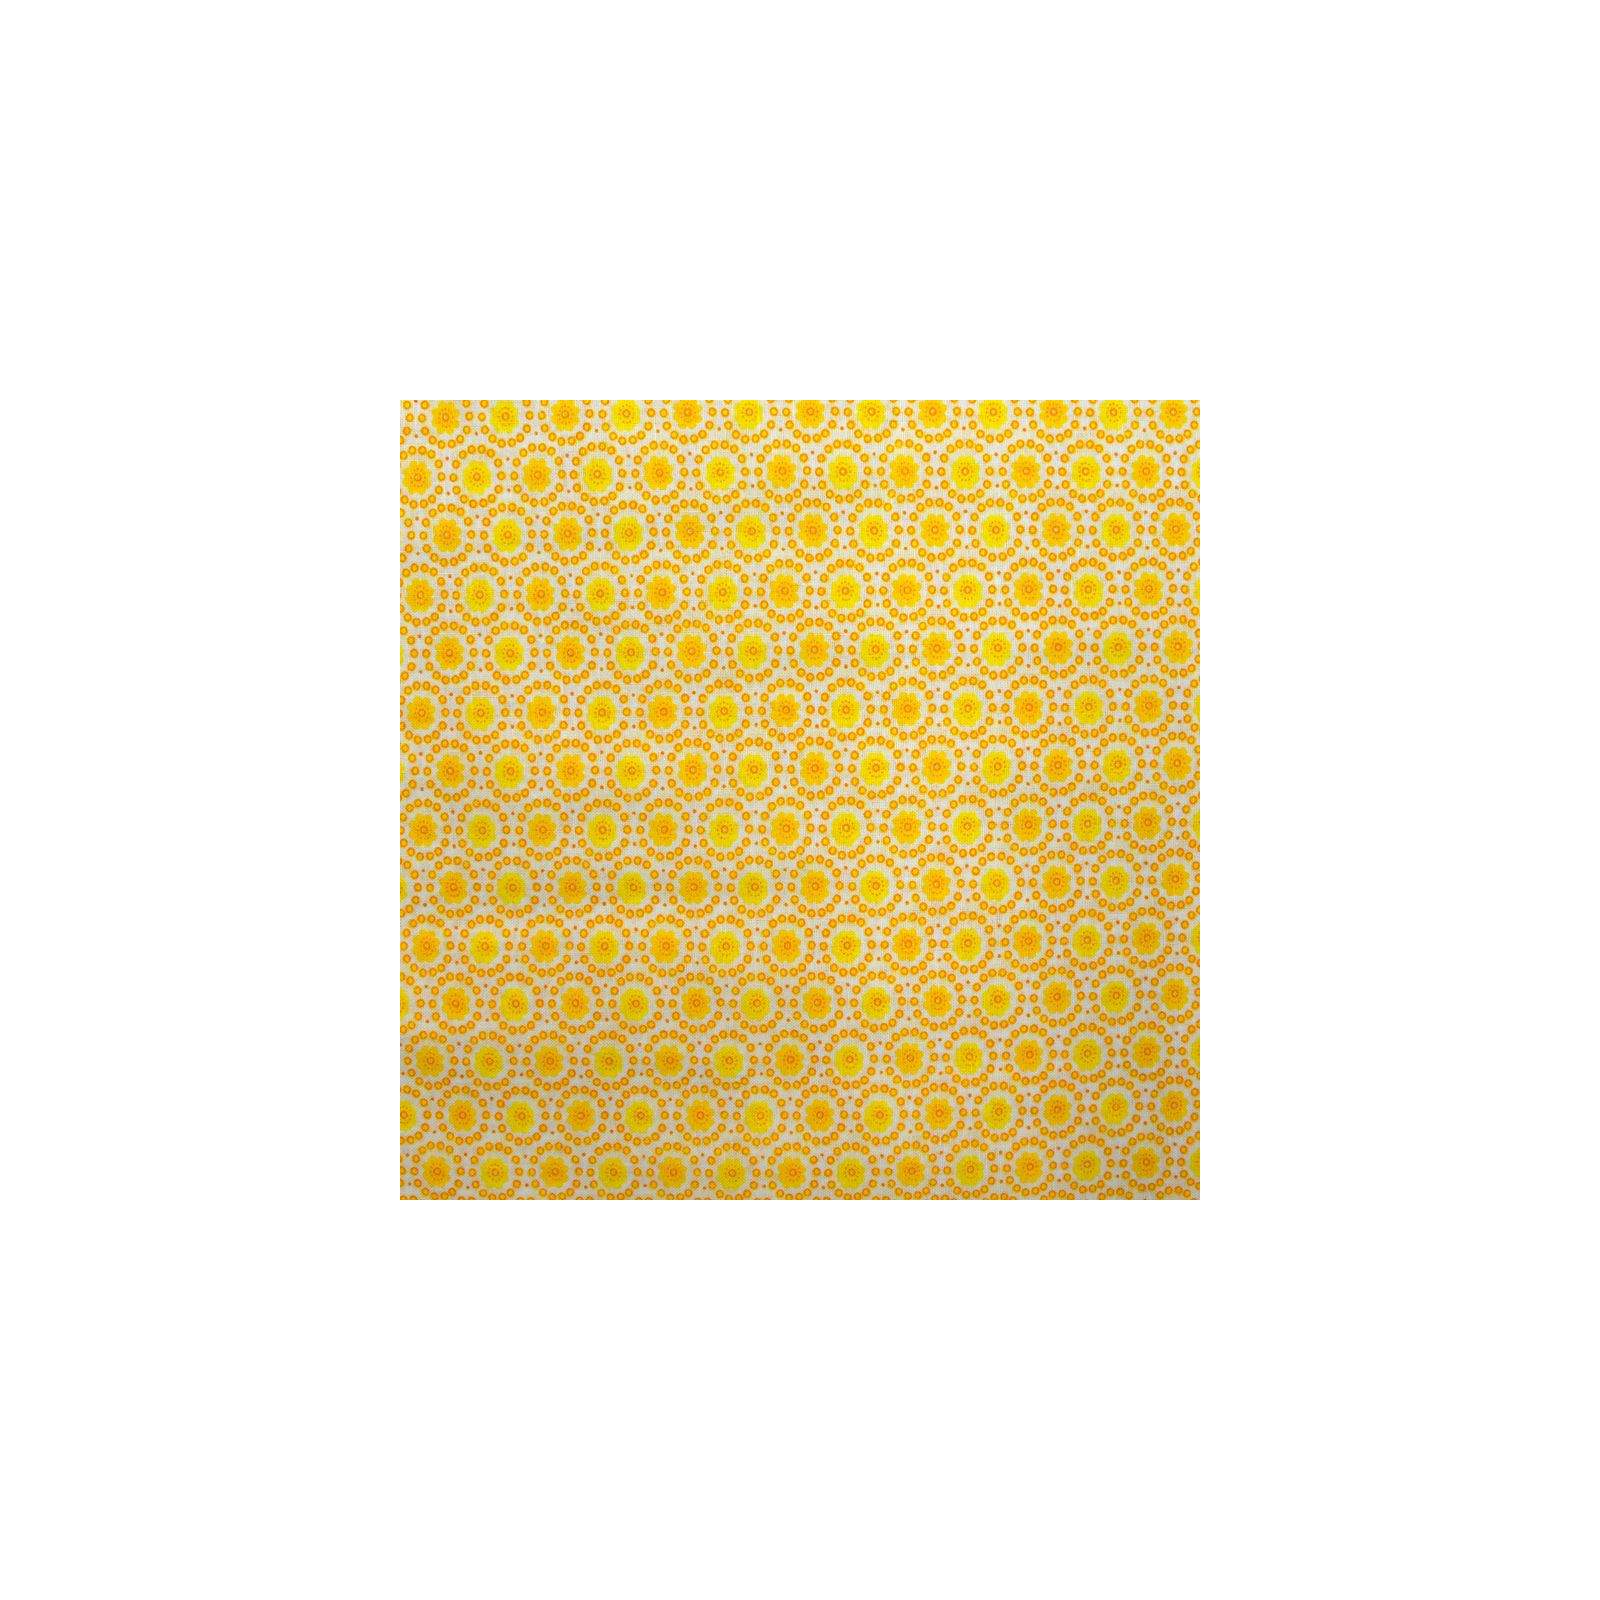 Tissu Coton imprimé fleurs et ronds jaune